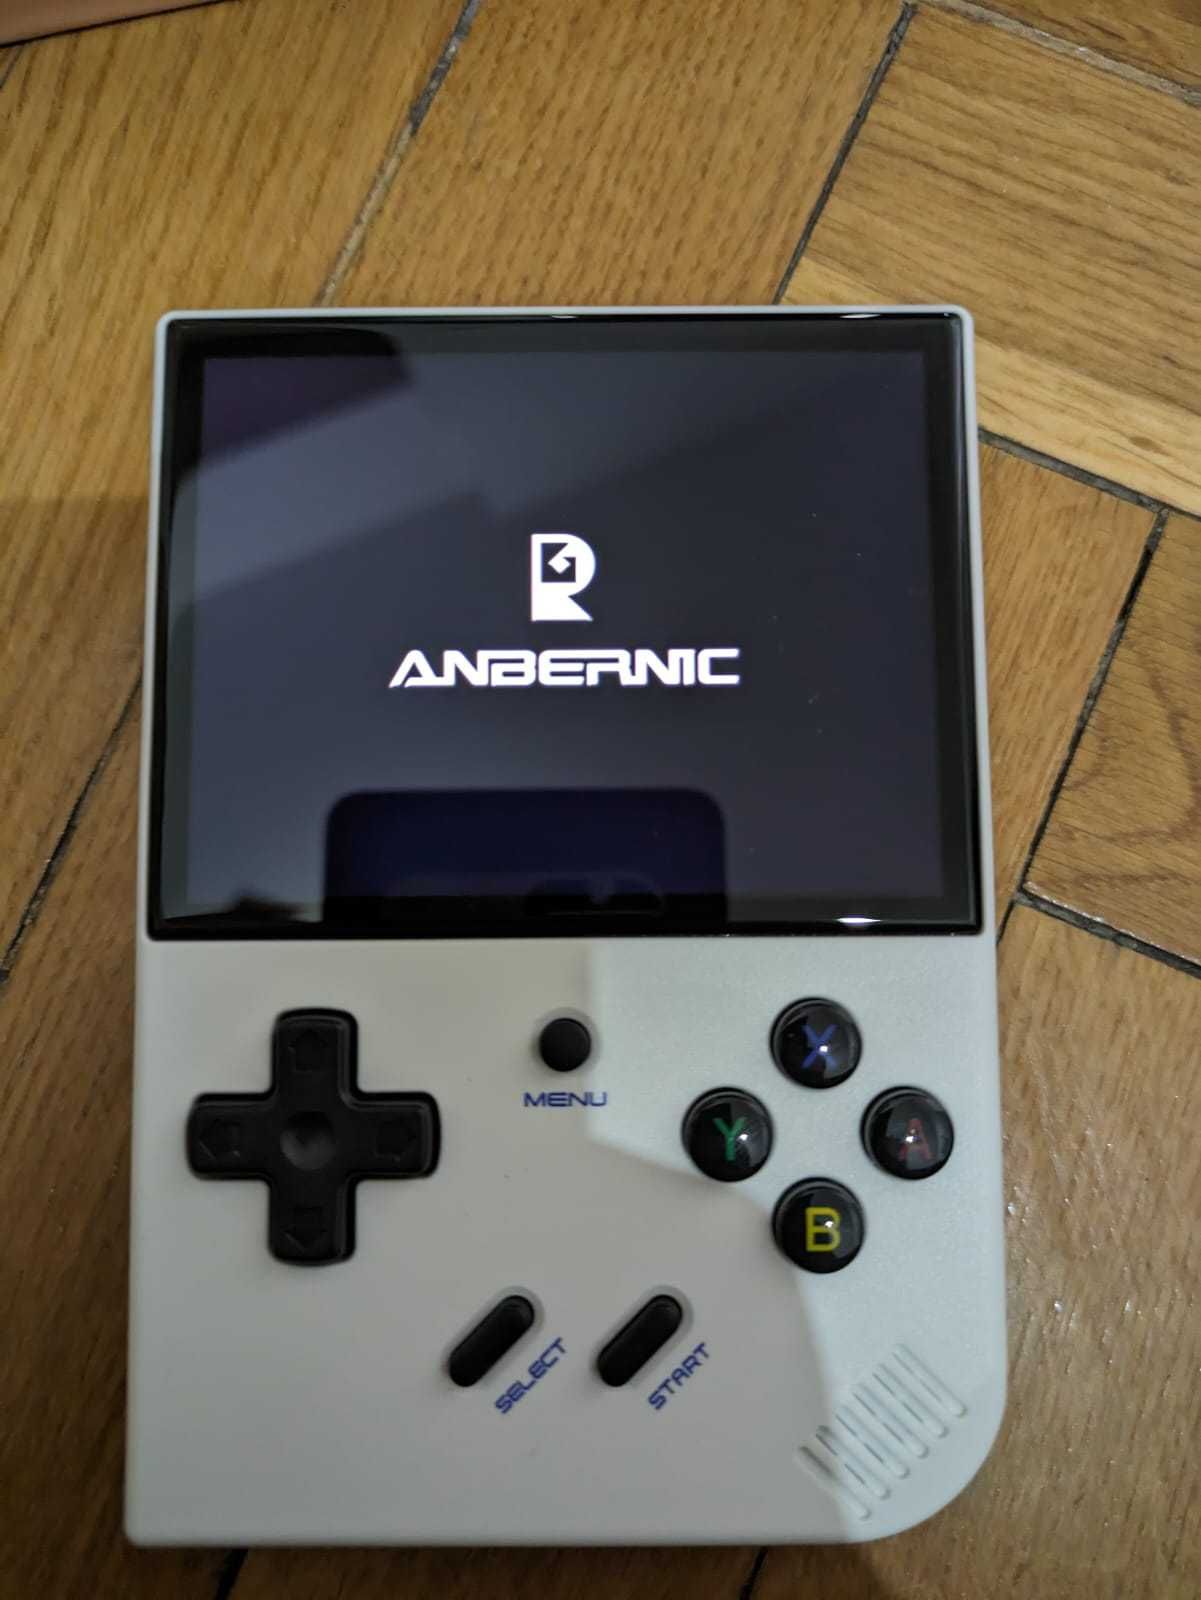 Consola portabila de jocuri retro Anbernic RG35XX Plus